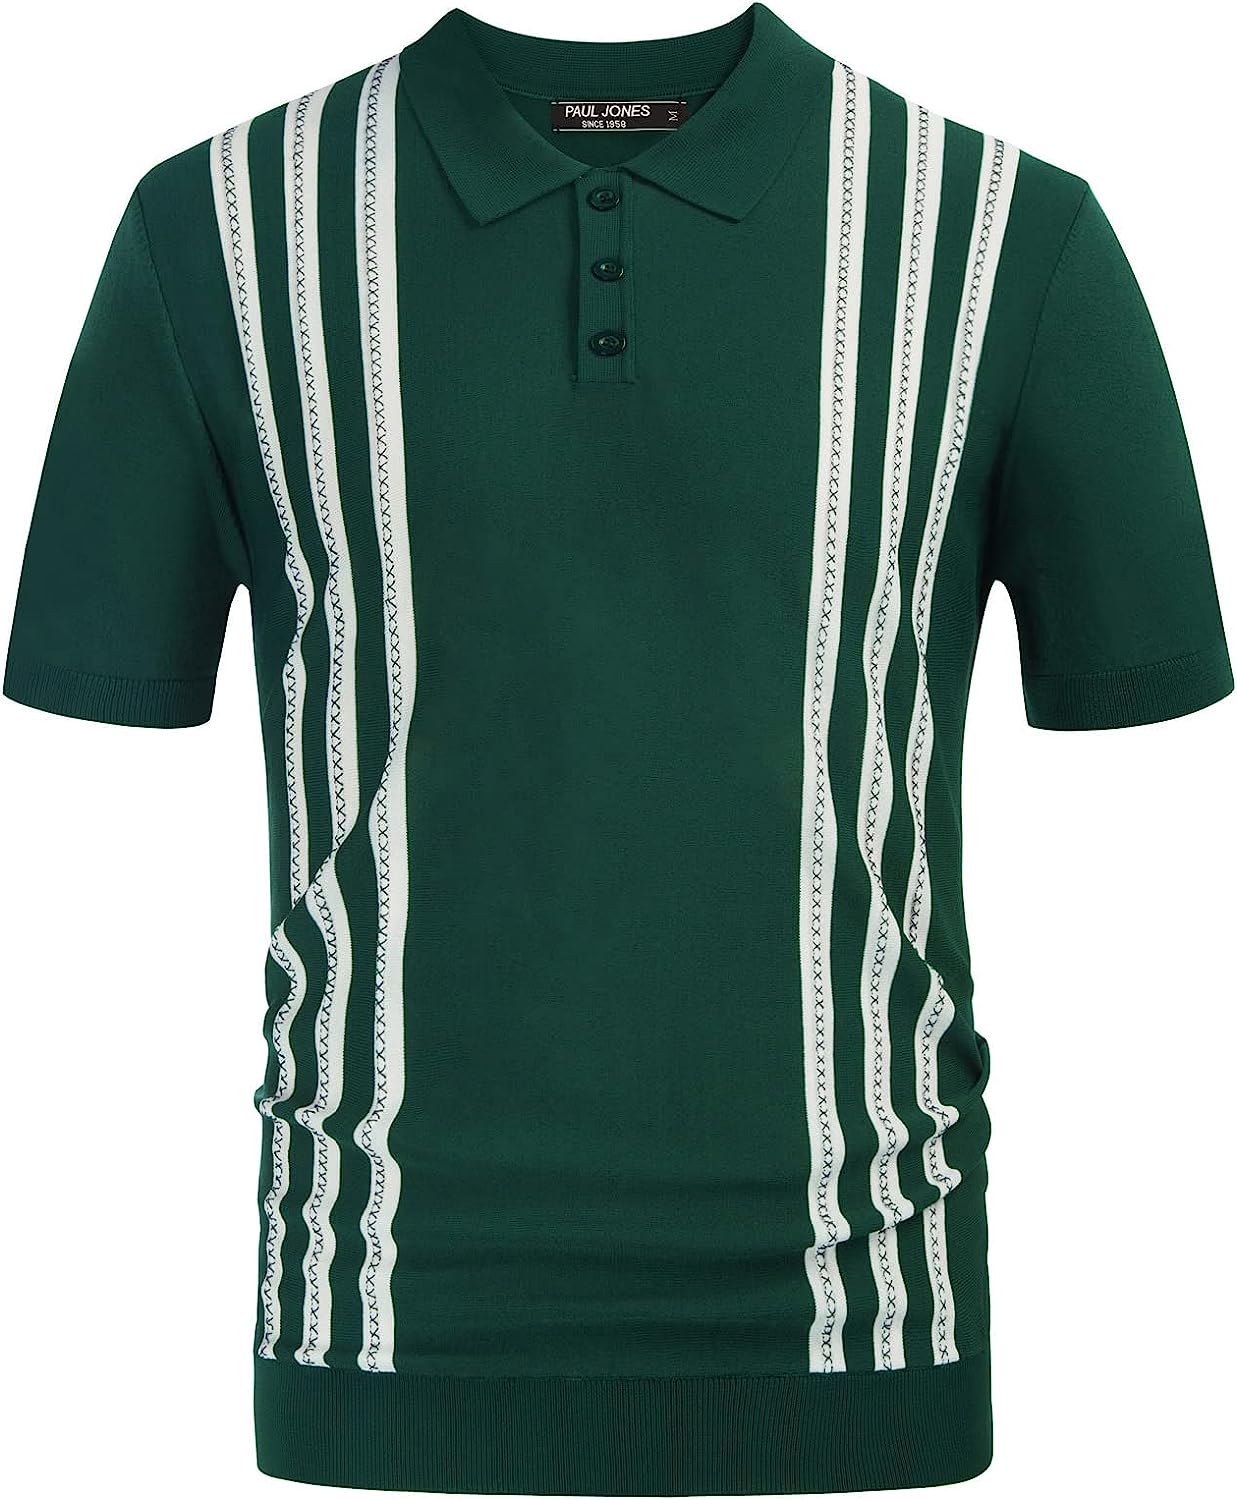 PJ Paul Jones Men's Casual Short Sleeve Polo Shirts